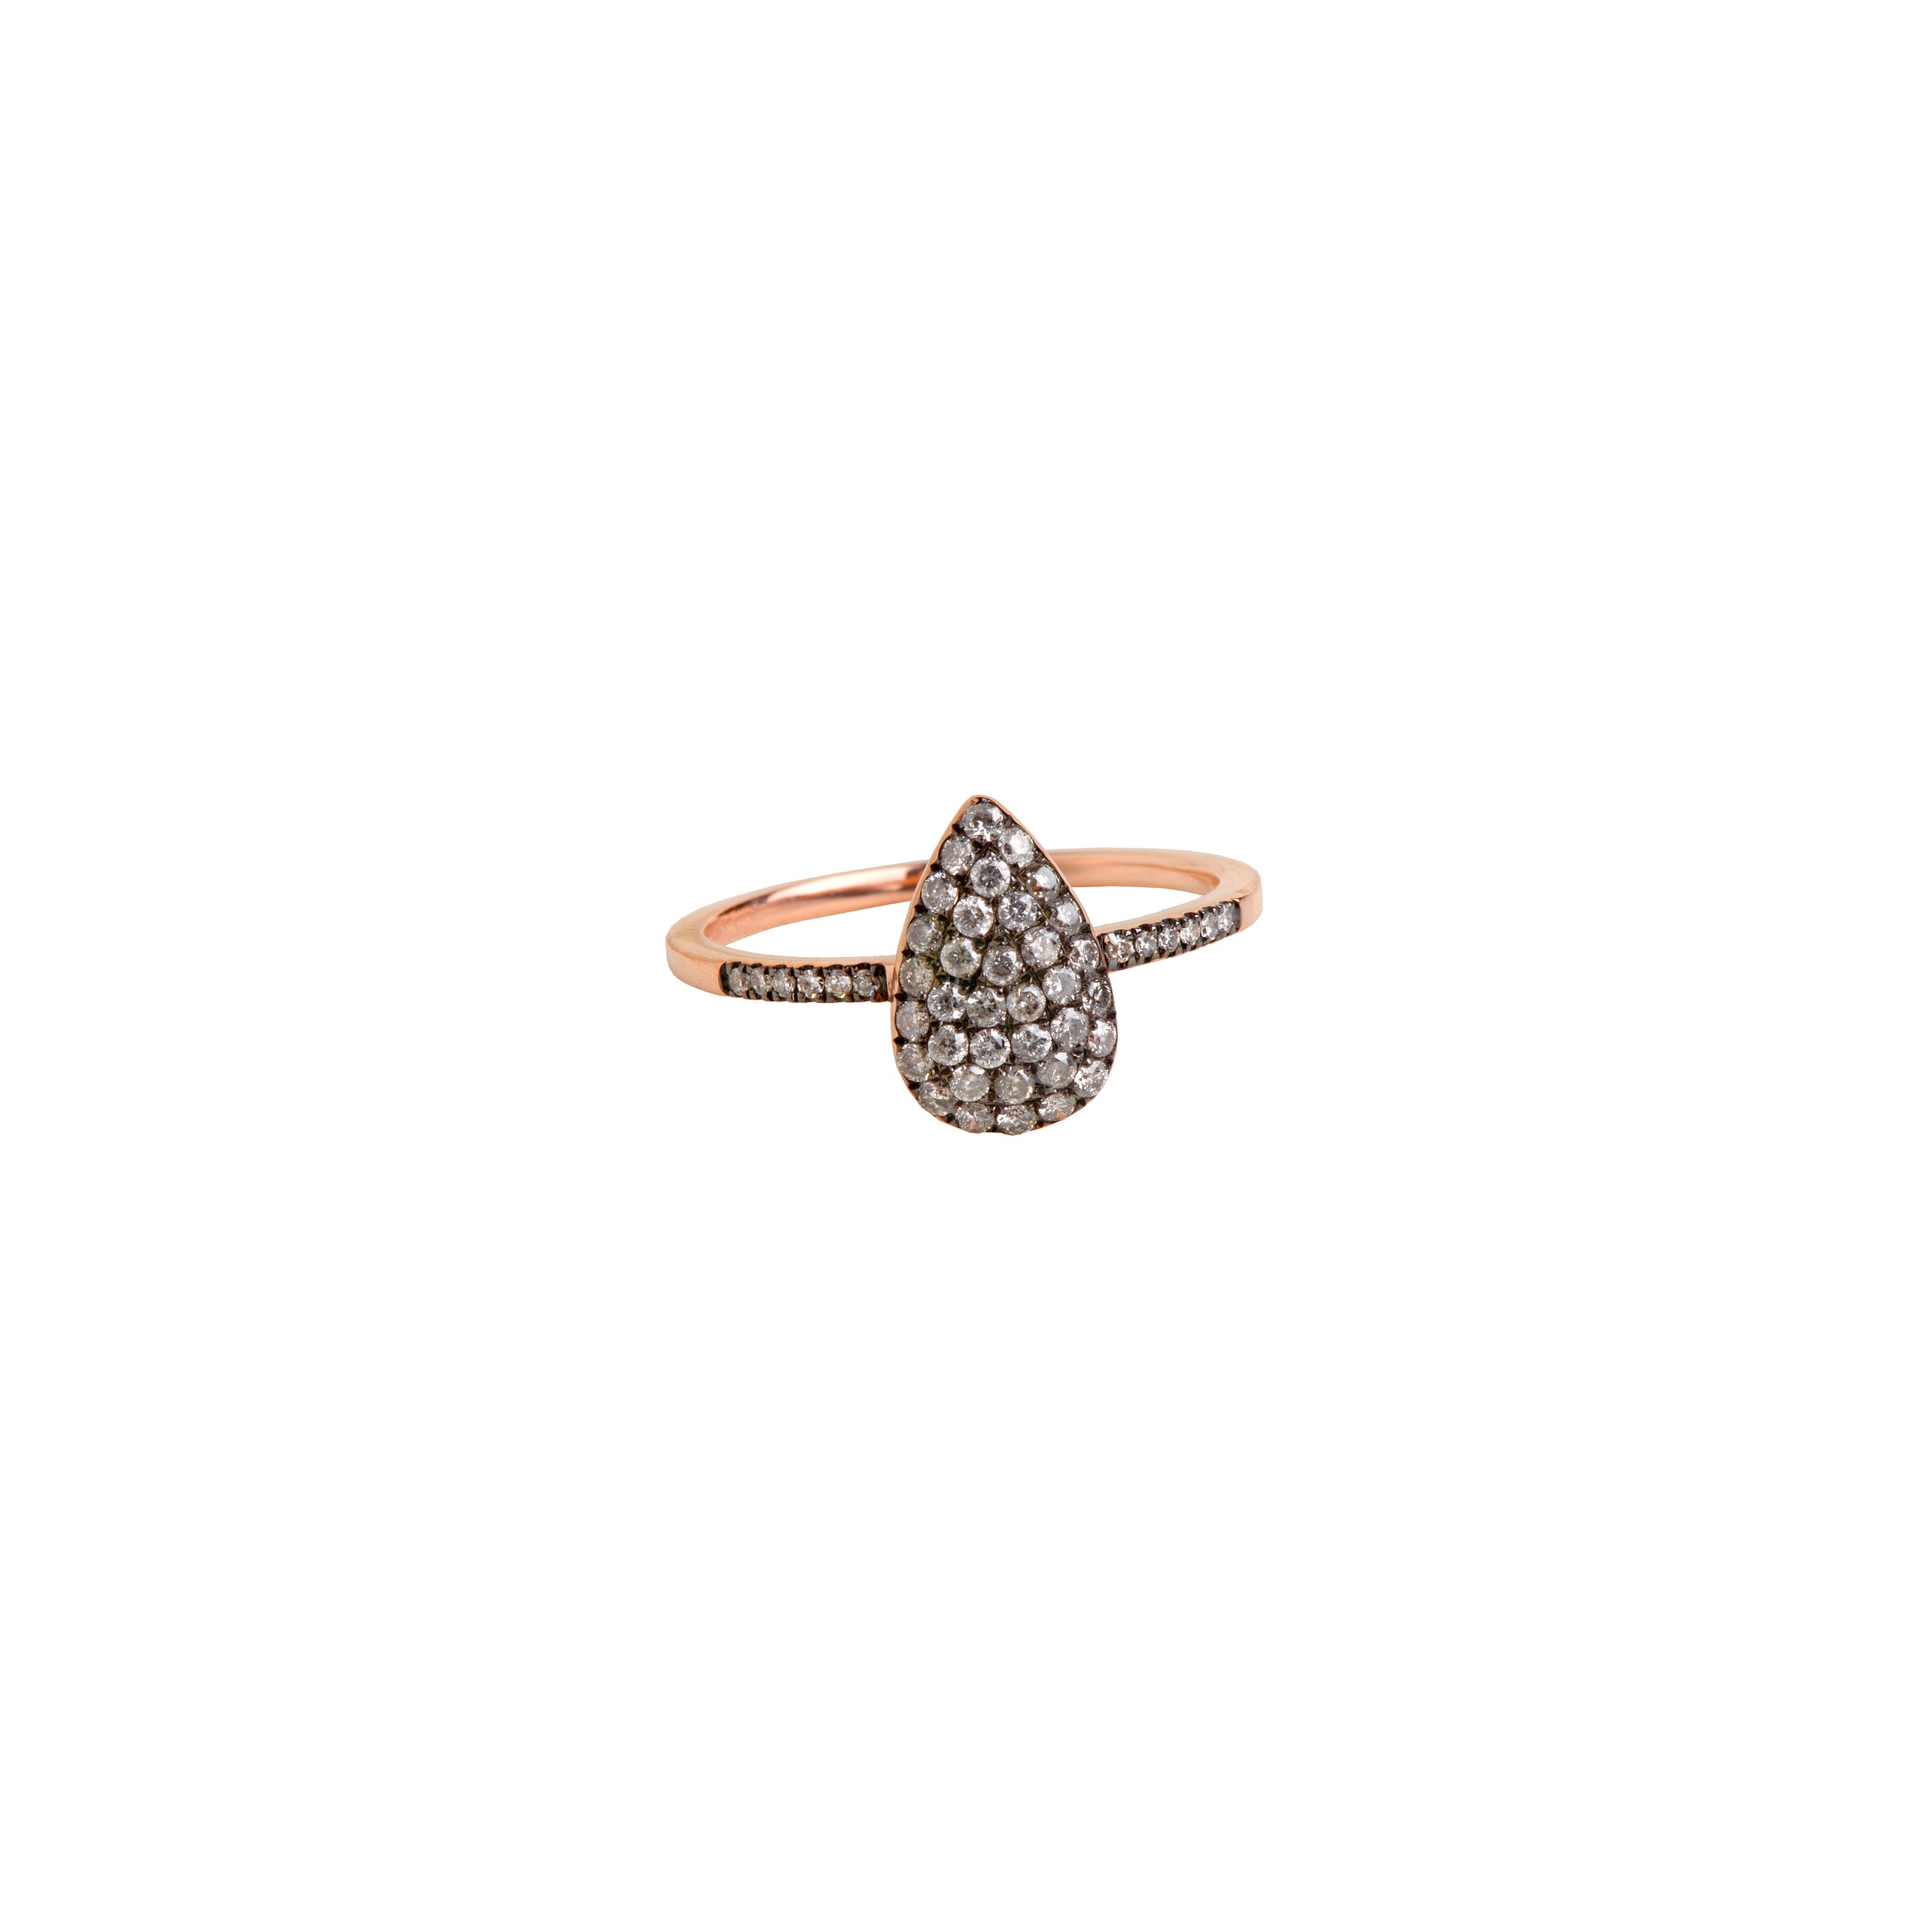 DIAMOND TEARDROP RING w/ GRAY DIAMONDS - Bridget King Jewelry